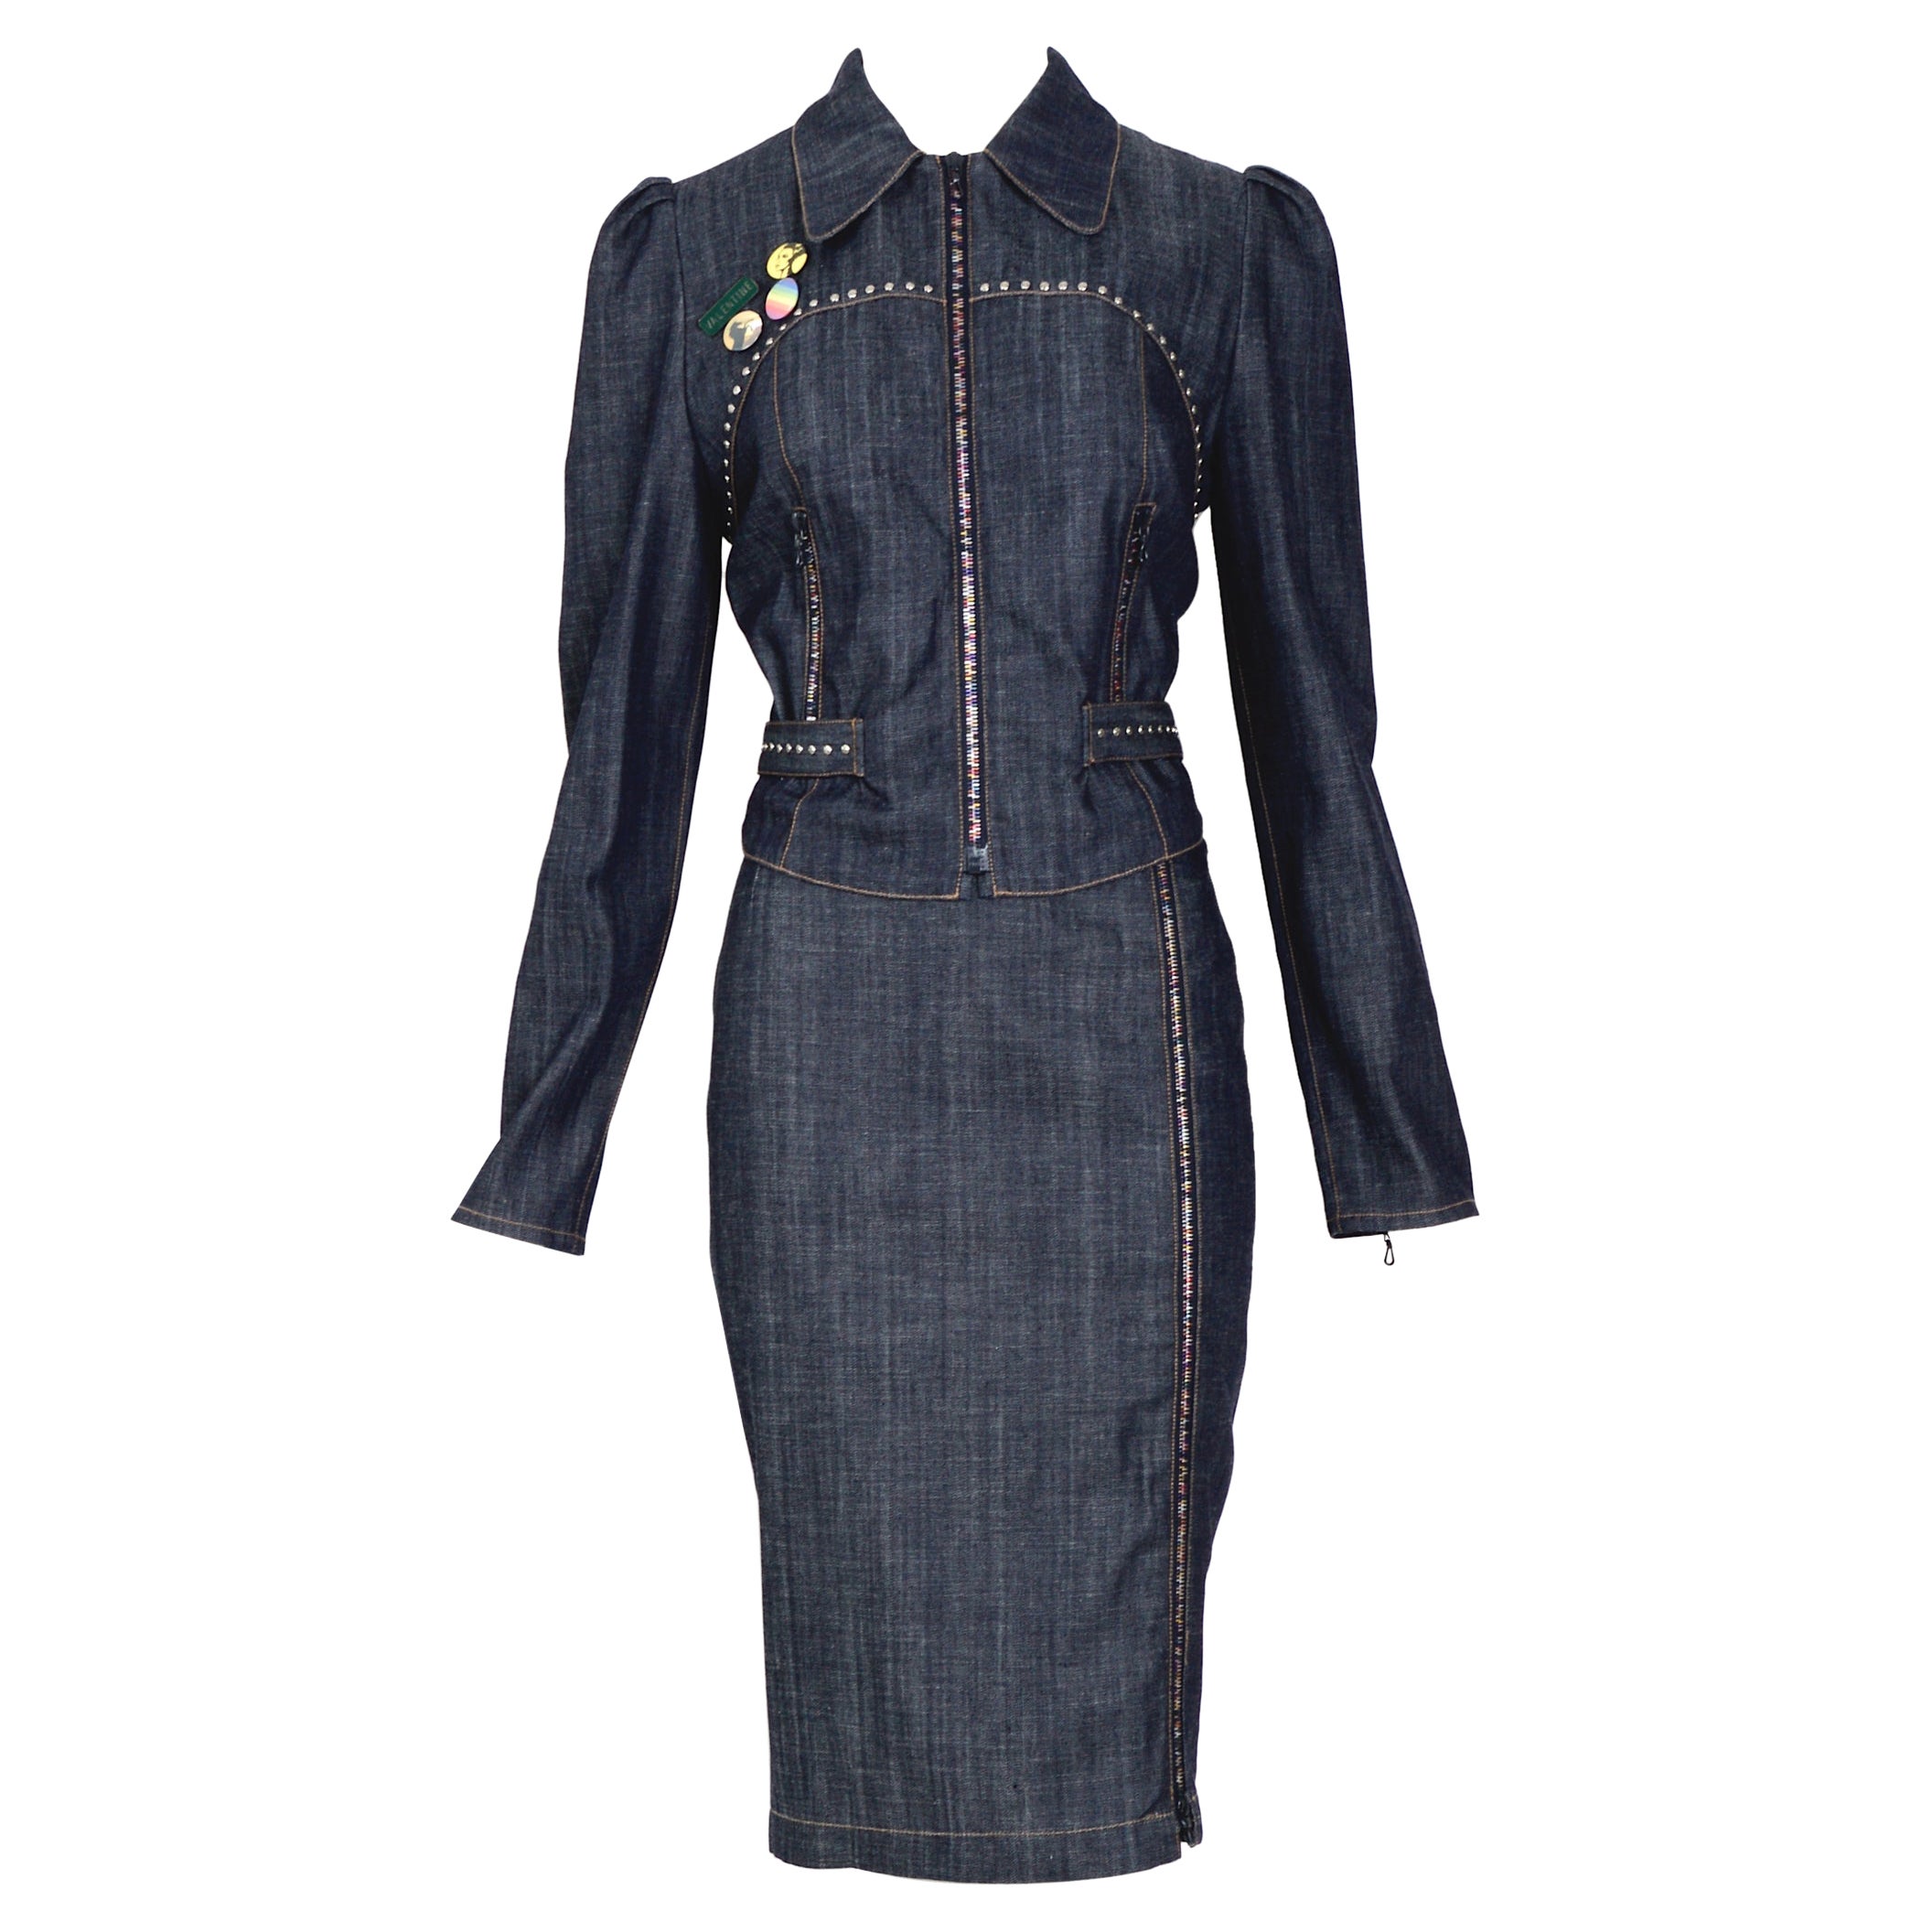 Chloé by Stella McCartney vintage 2001 denim jacket and skirt set For Sale